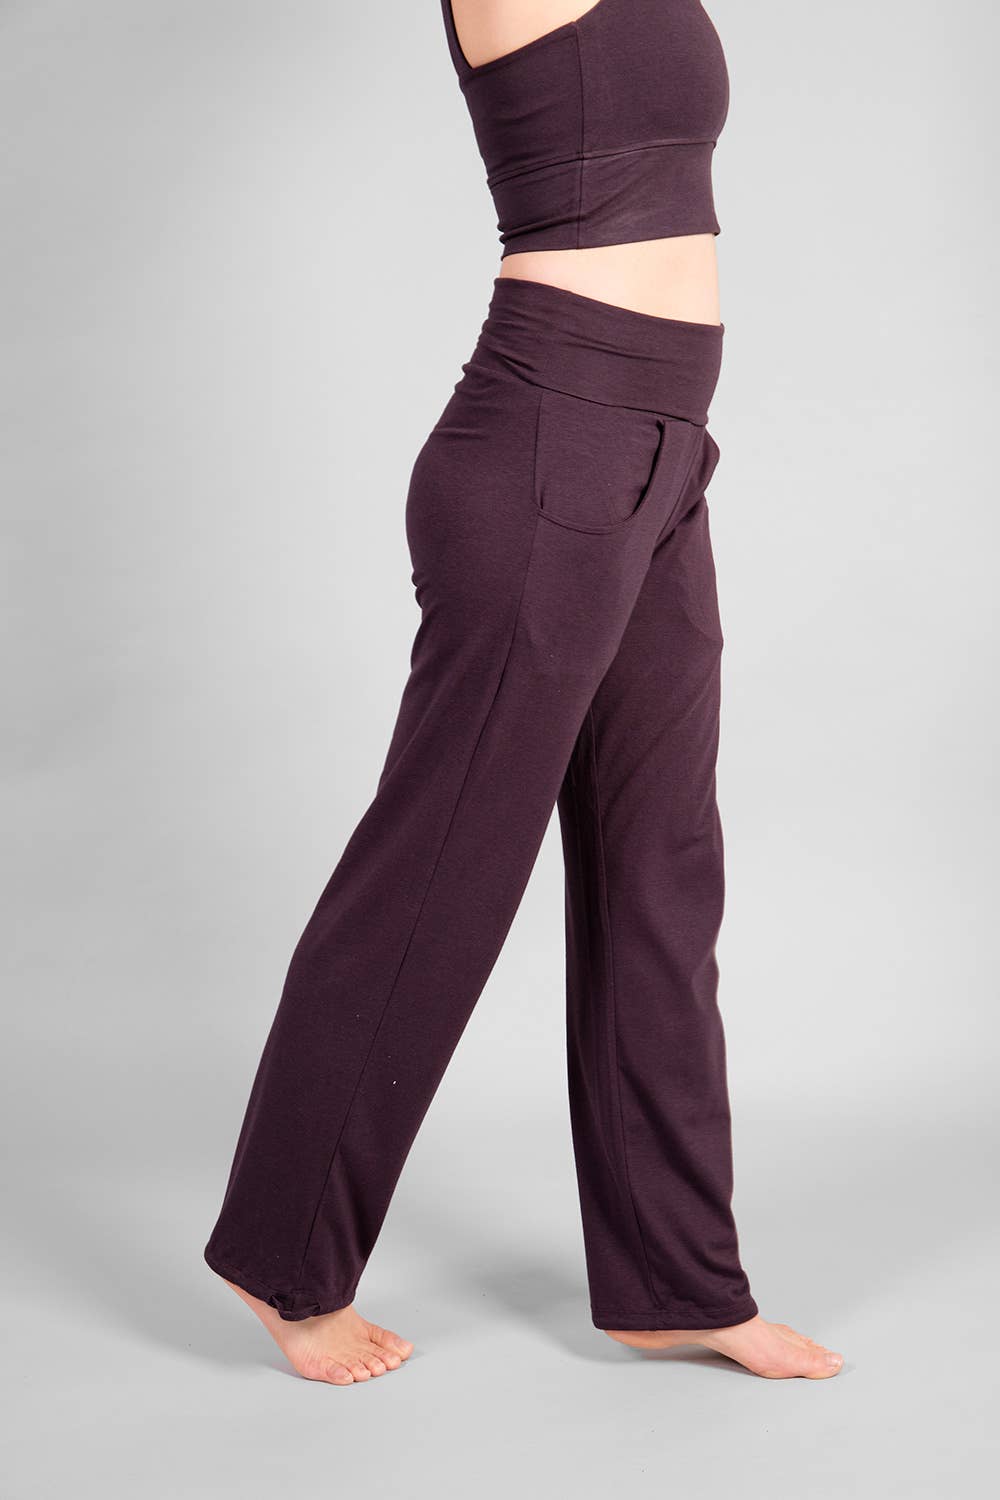 Lilii Women’s Loose Fit Pants - Dark purple